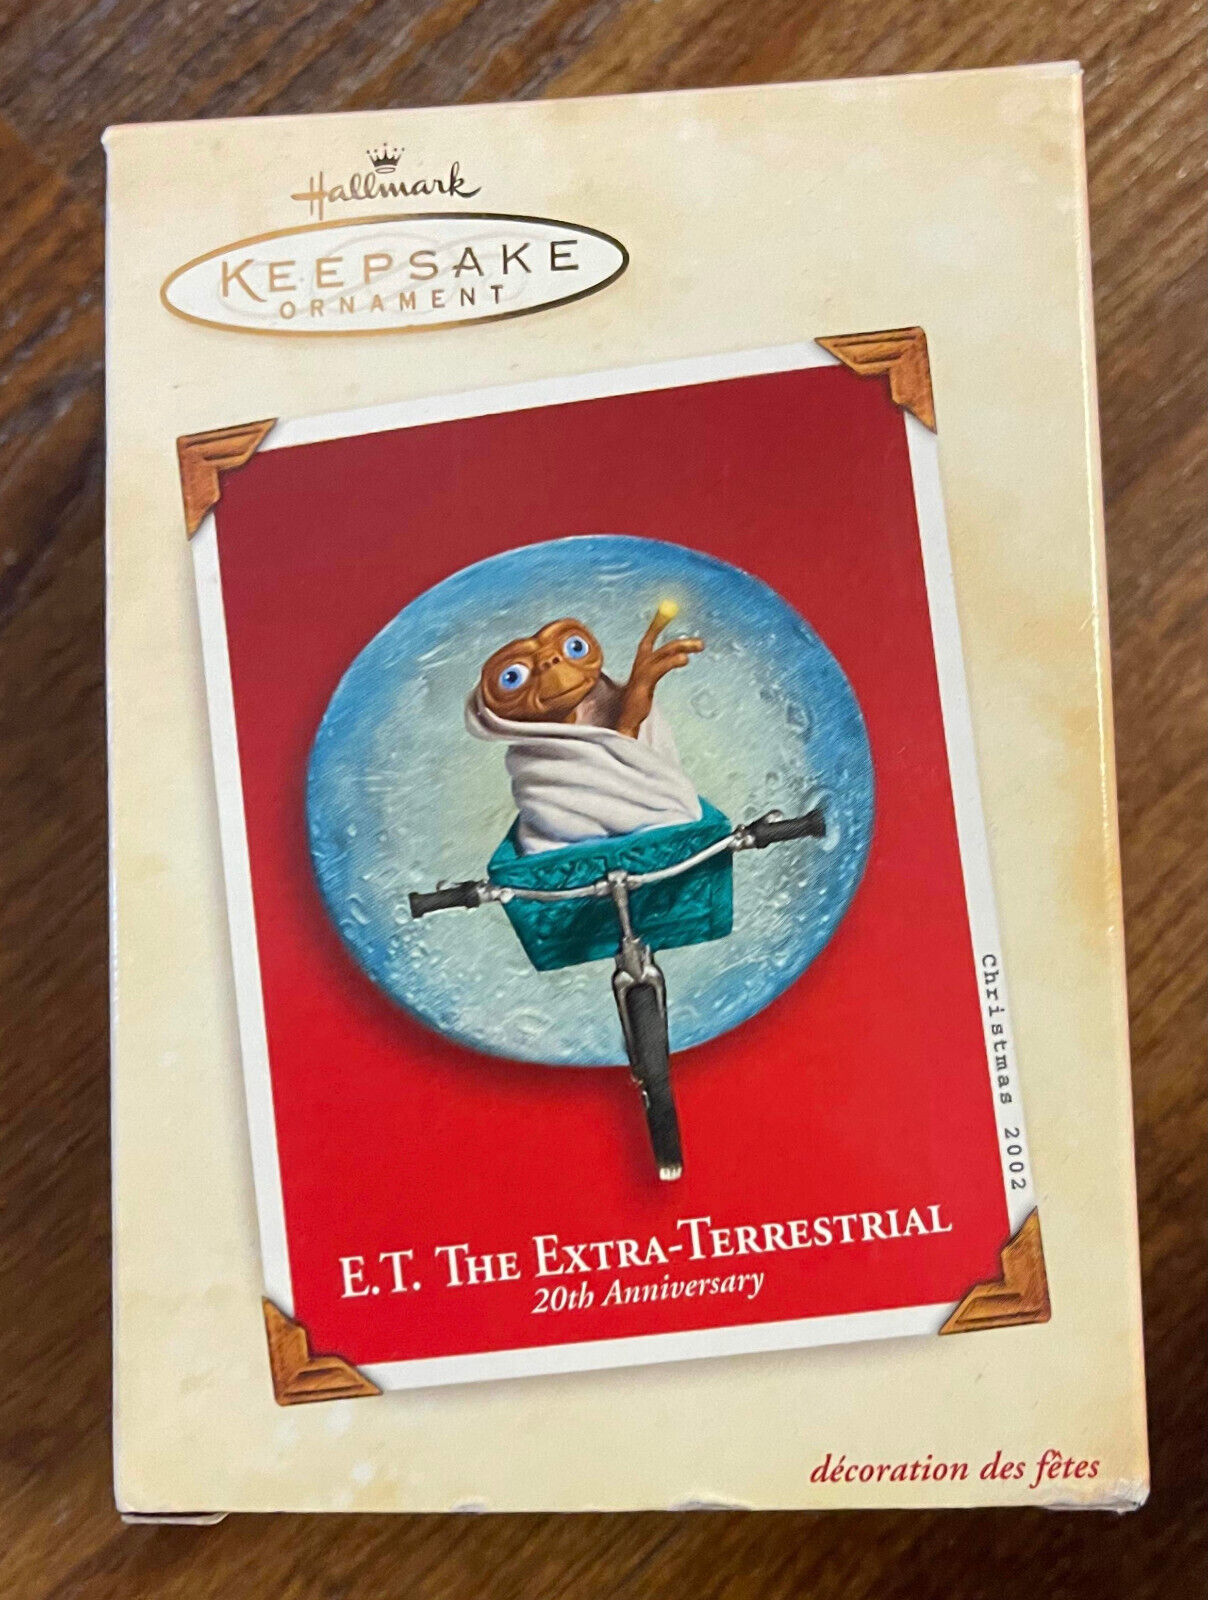 2002 Hallmark Keepsake Ornament E.T. THE EXTRA-TERRESTRIAL 20th Anniversary